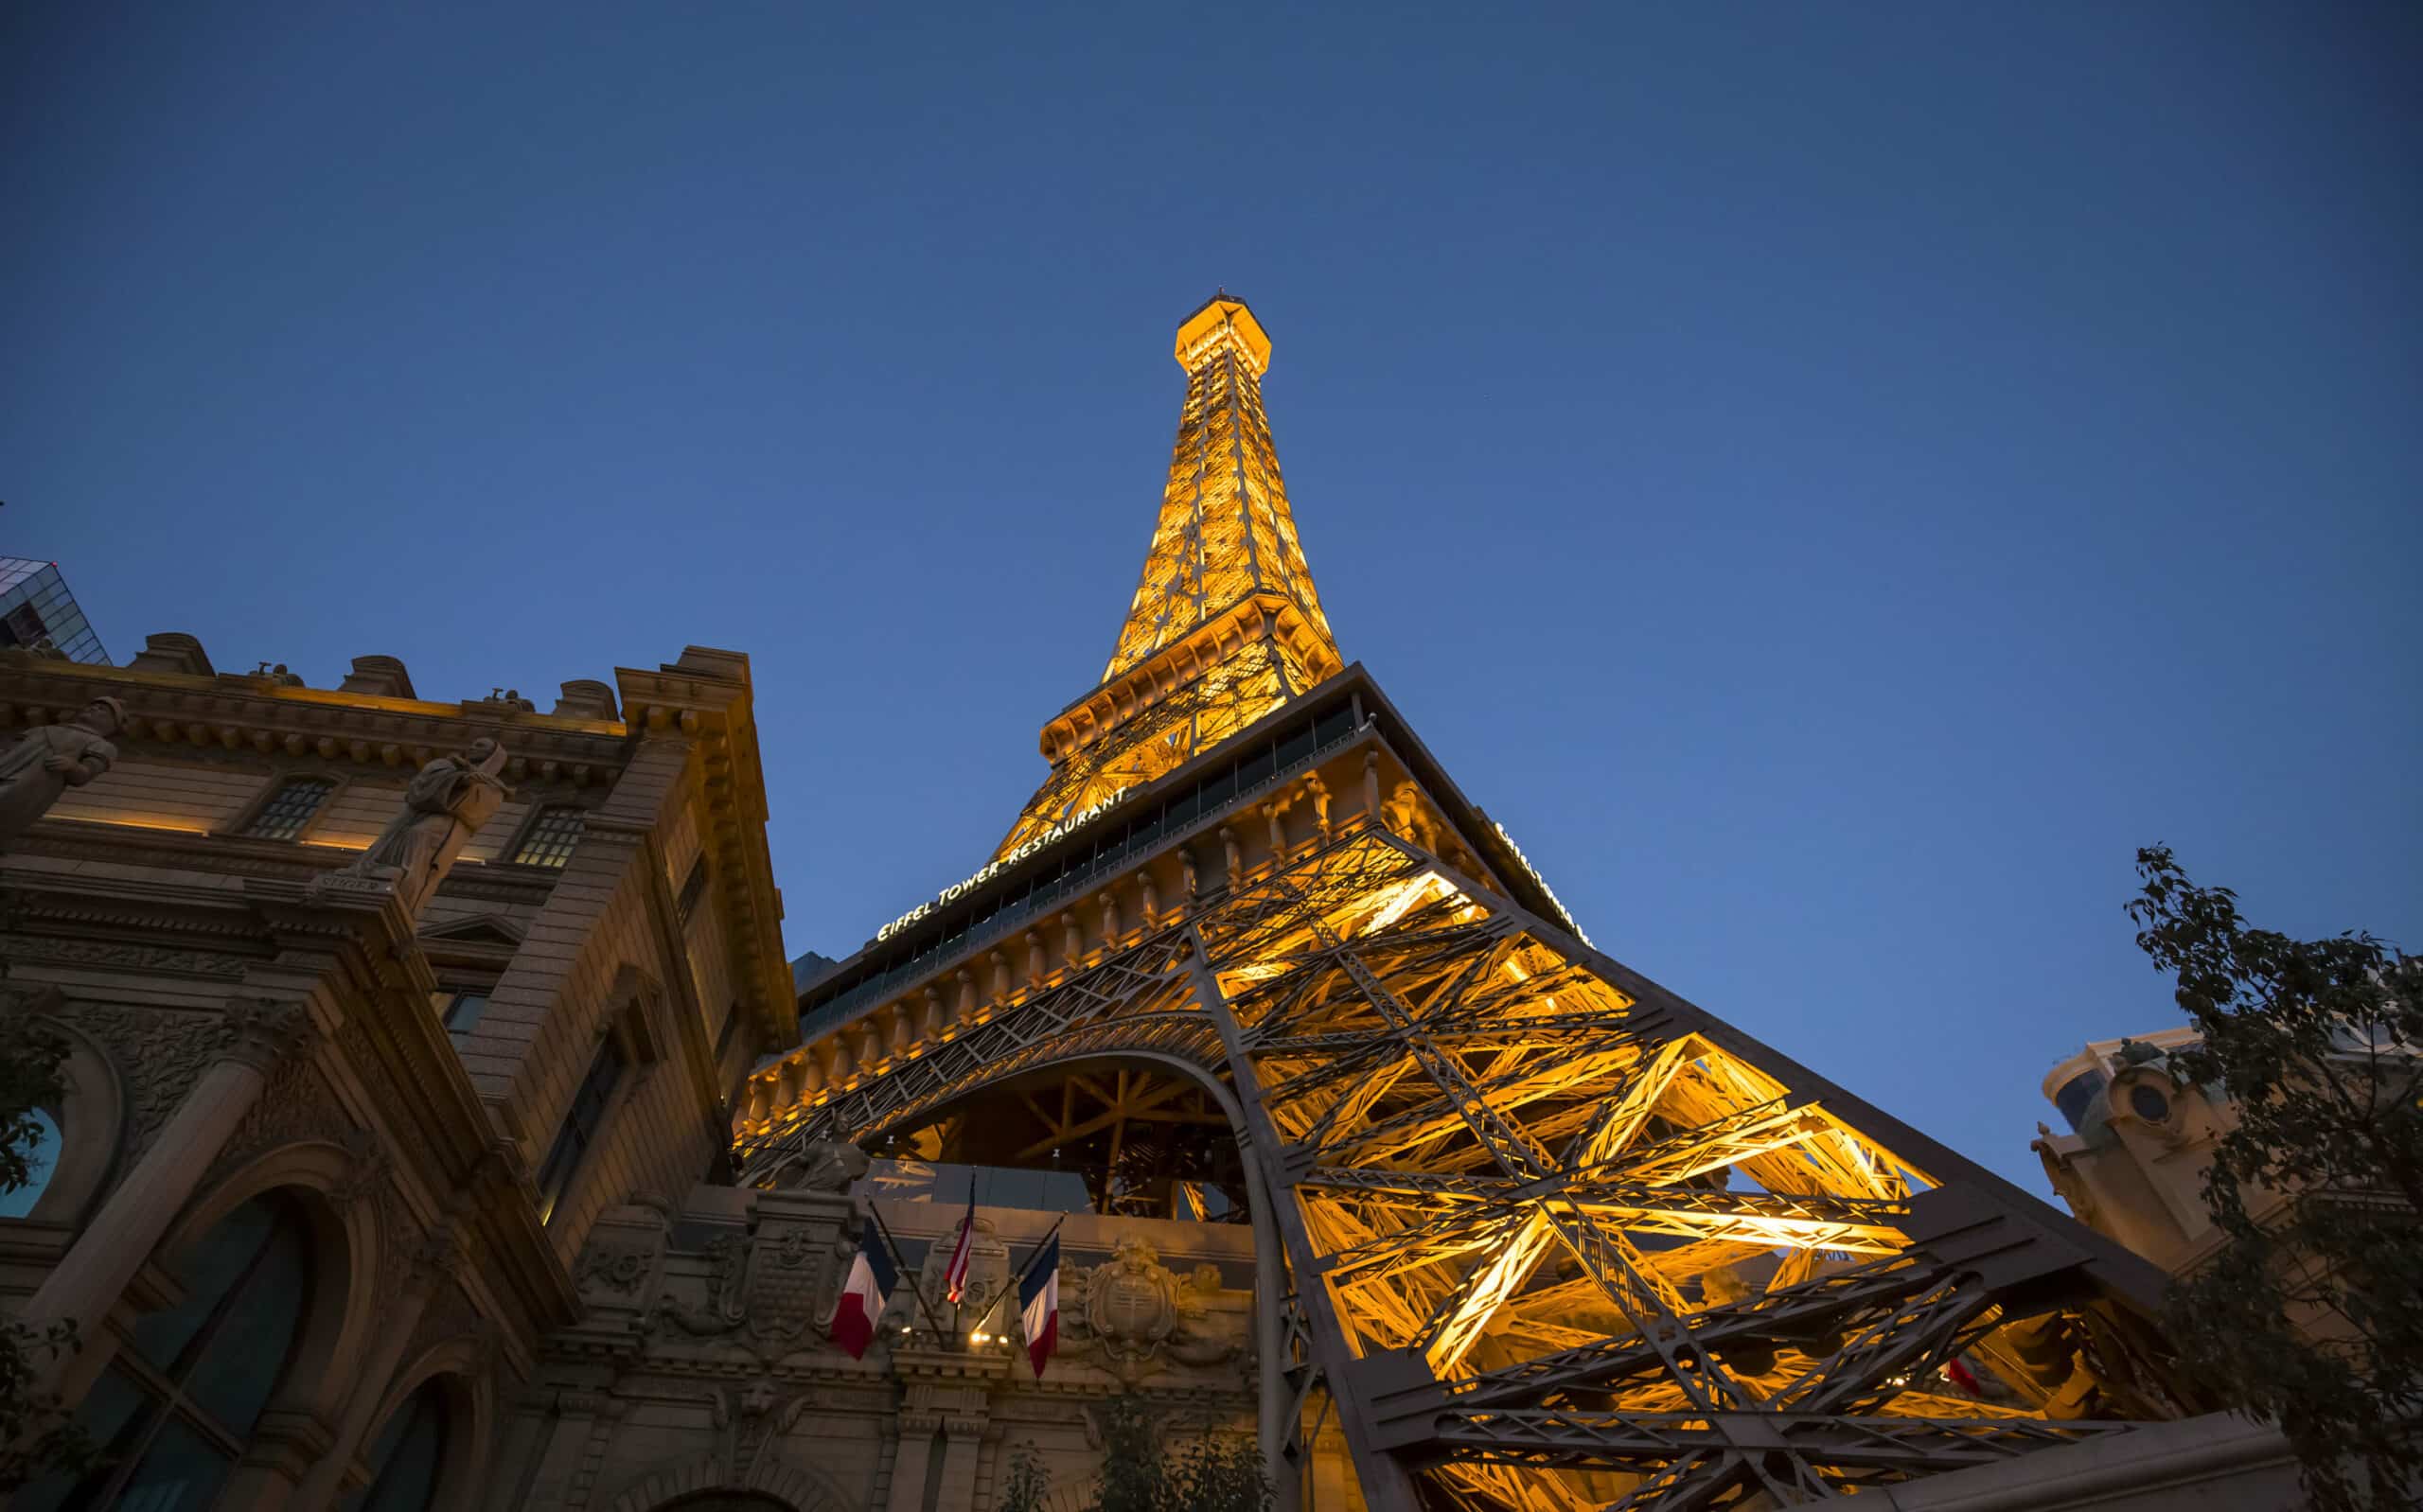 Eiffel Tower at Paris Las Vegas